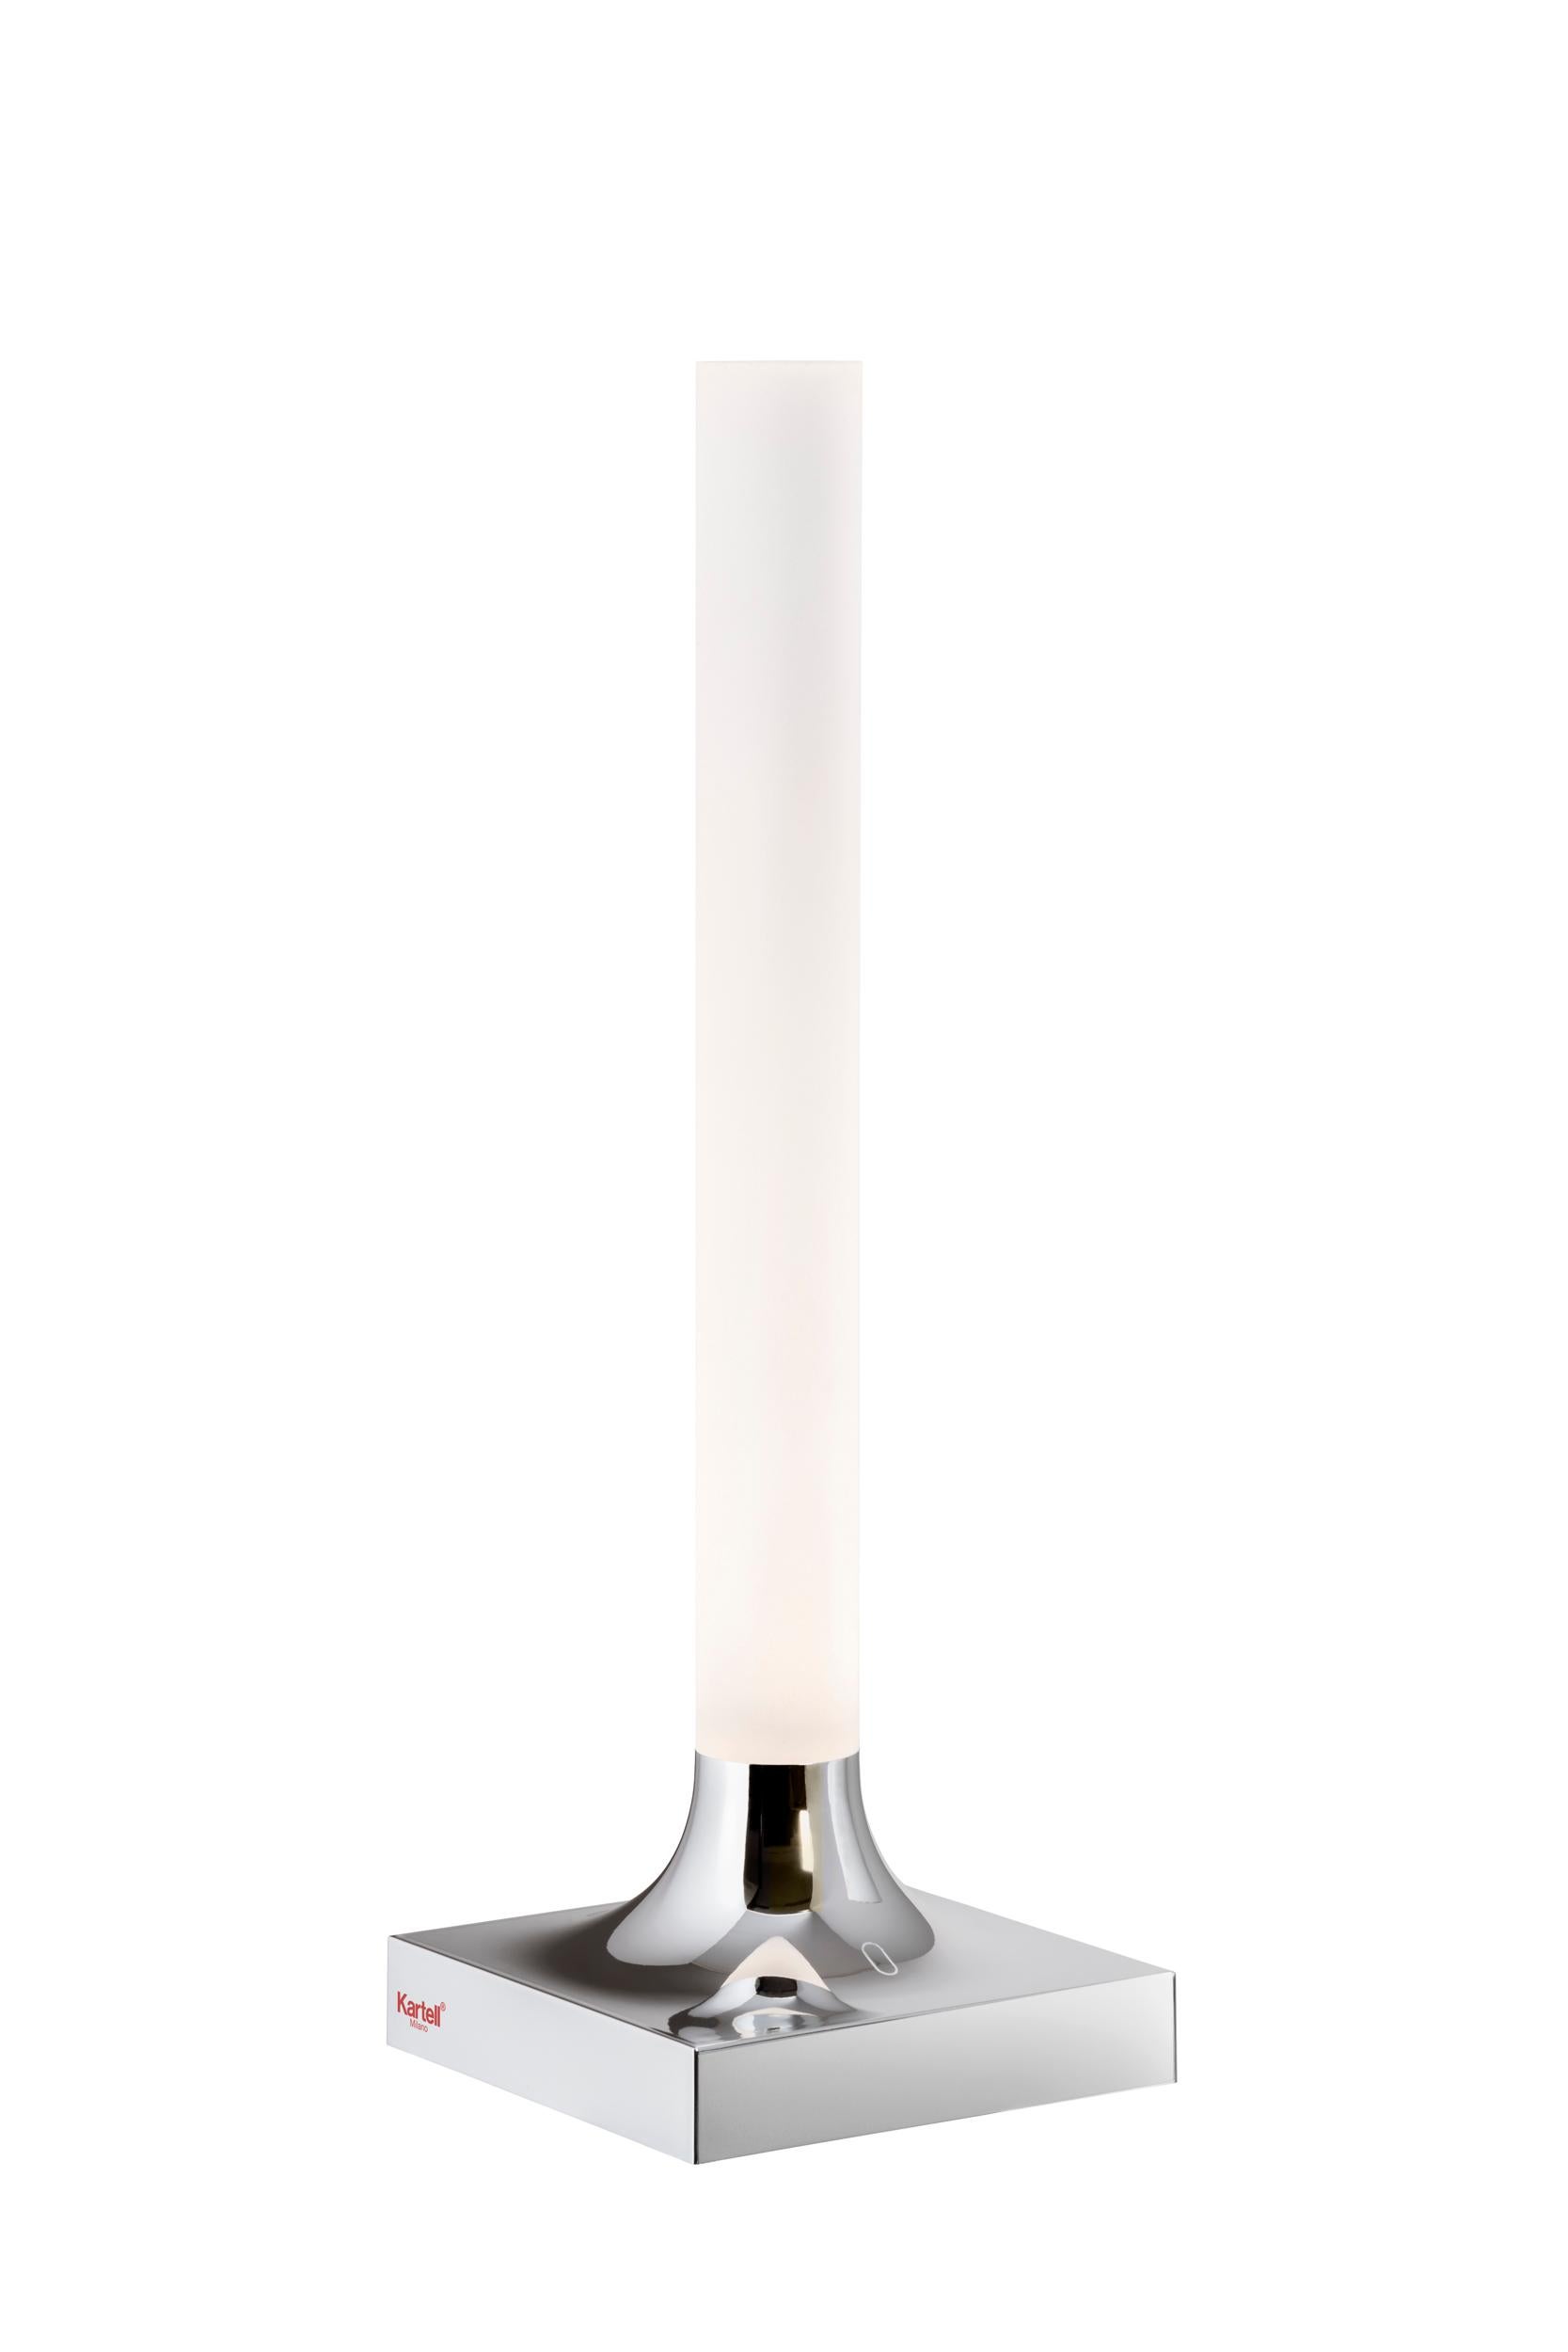 Plastique Lampe de table Kartell Goodnight de Philippe Starck en vente